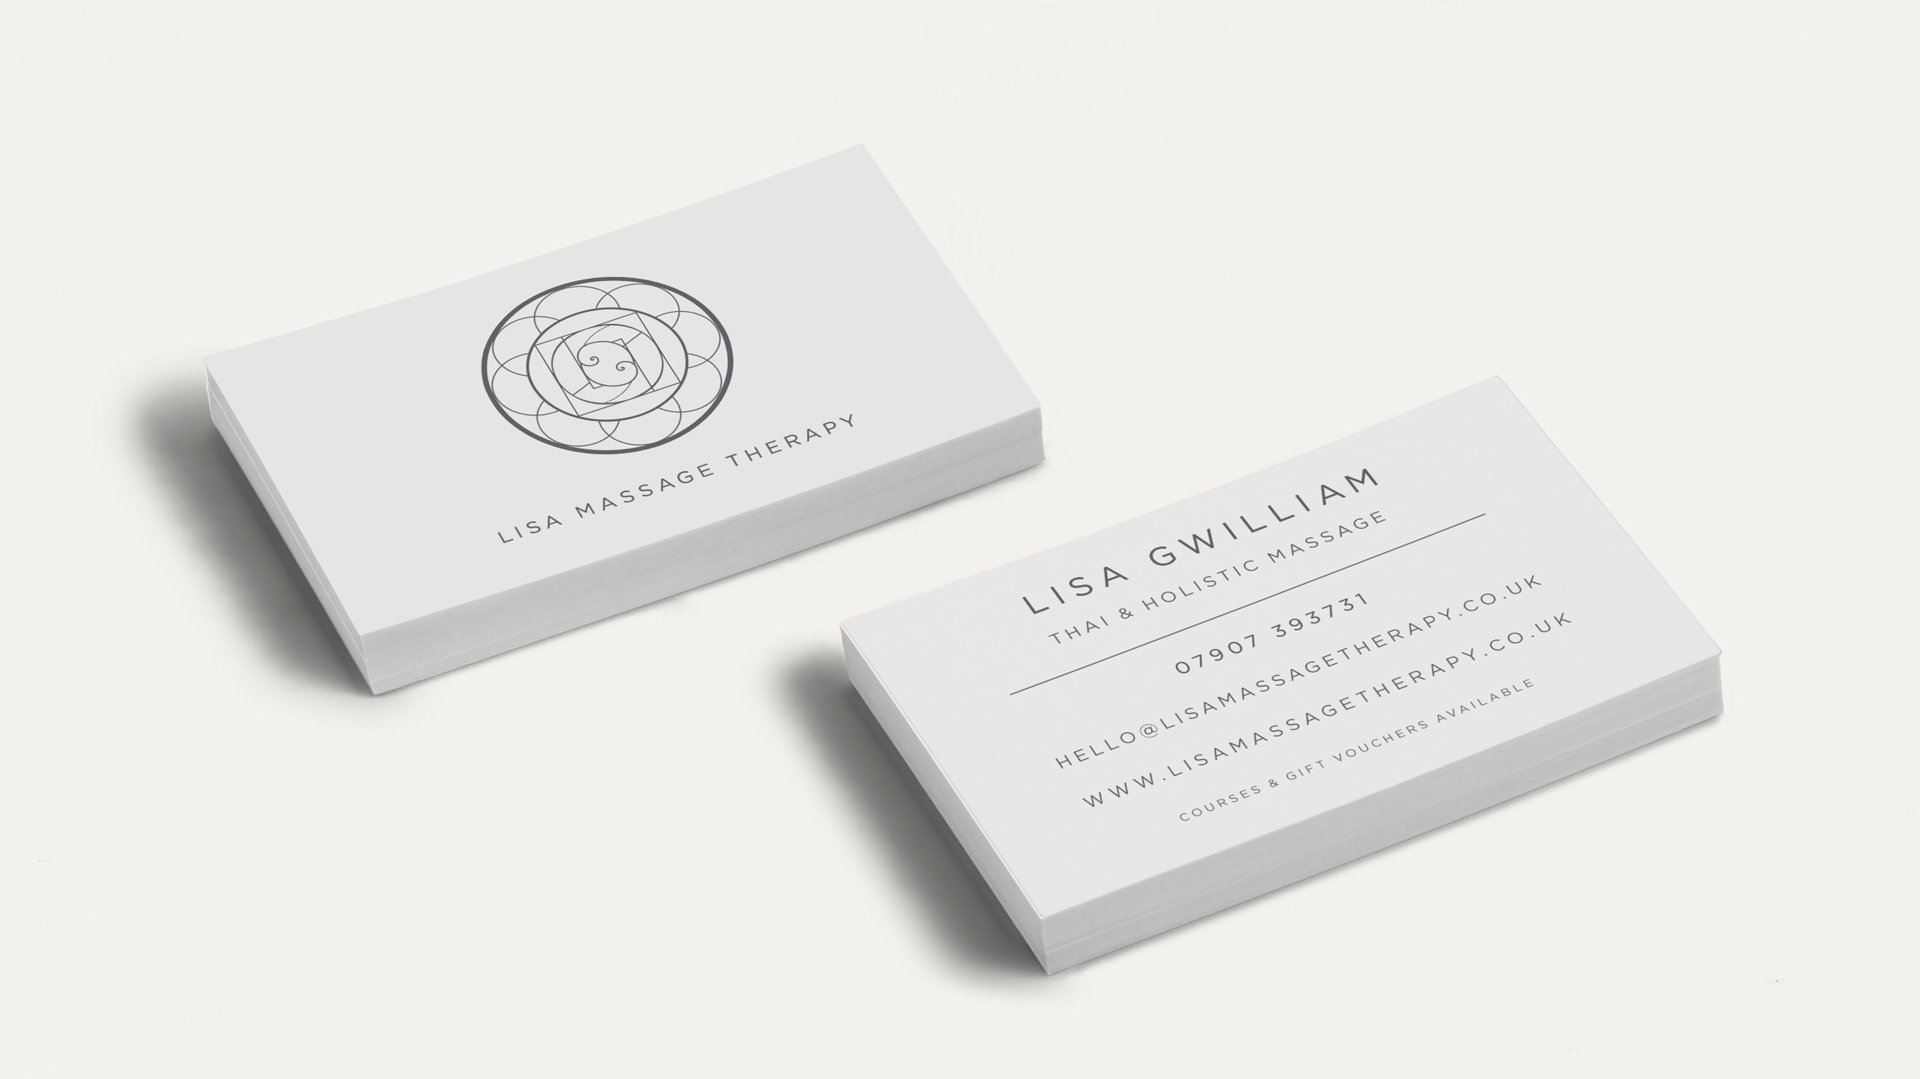 Lisa-Gwilliam-Massage-Business-Card-03.jpg